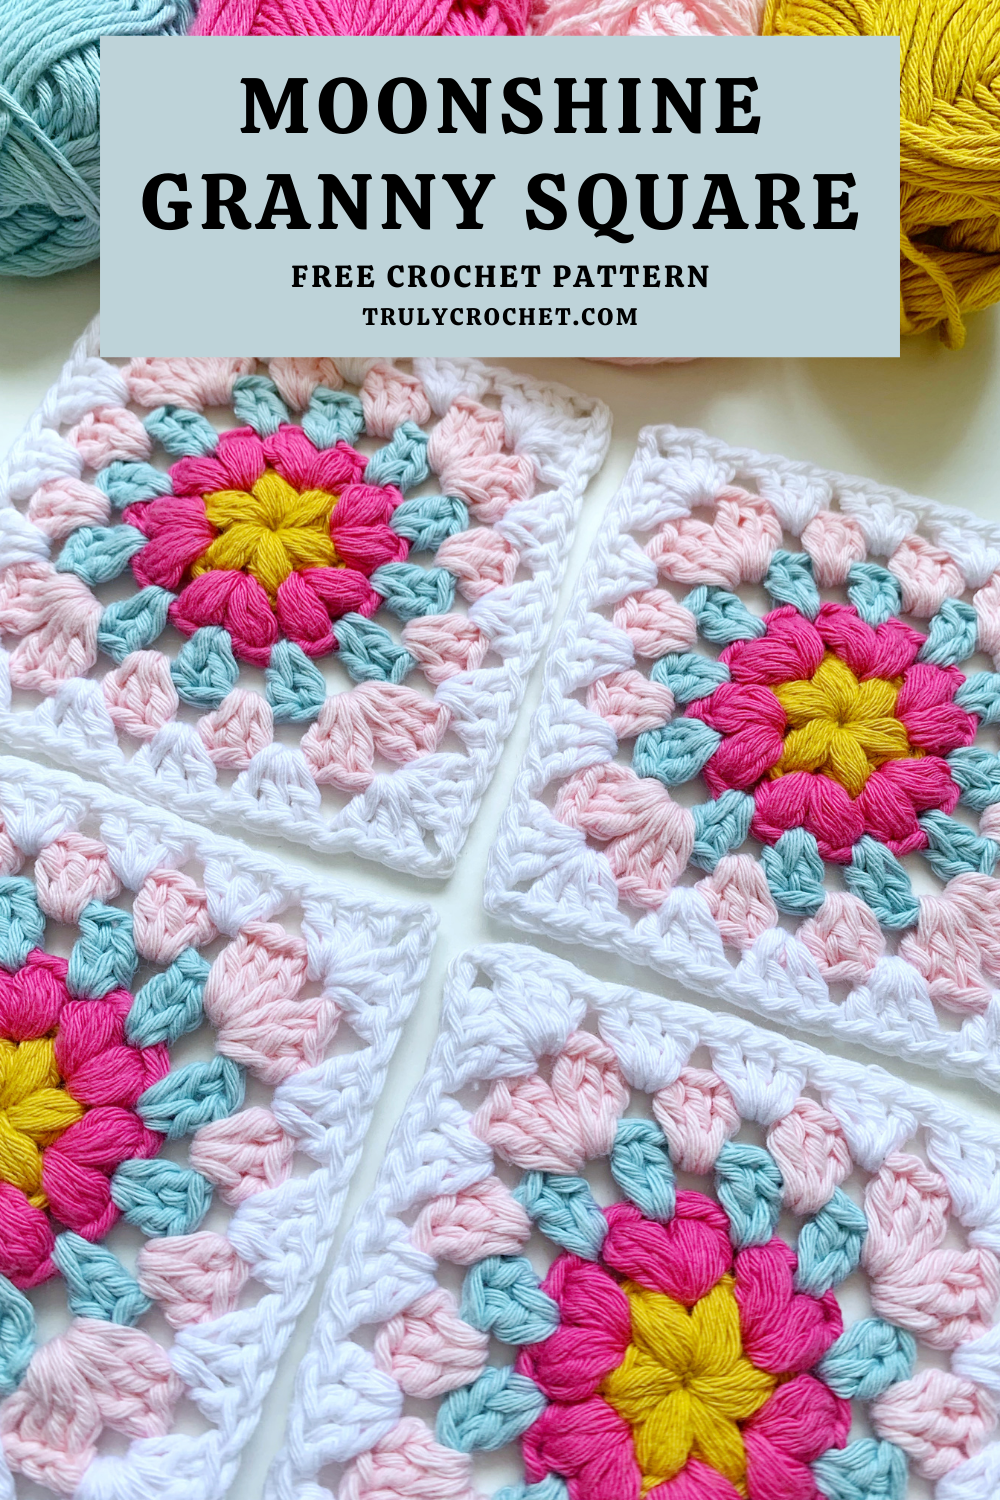 Moonshine Granny Square Pin - Free Crochet Pattern